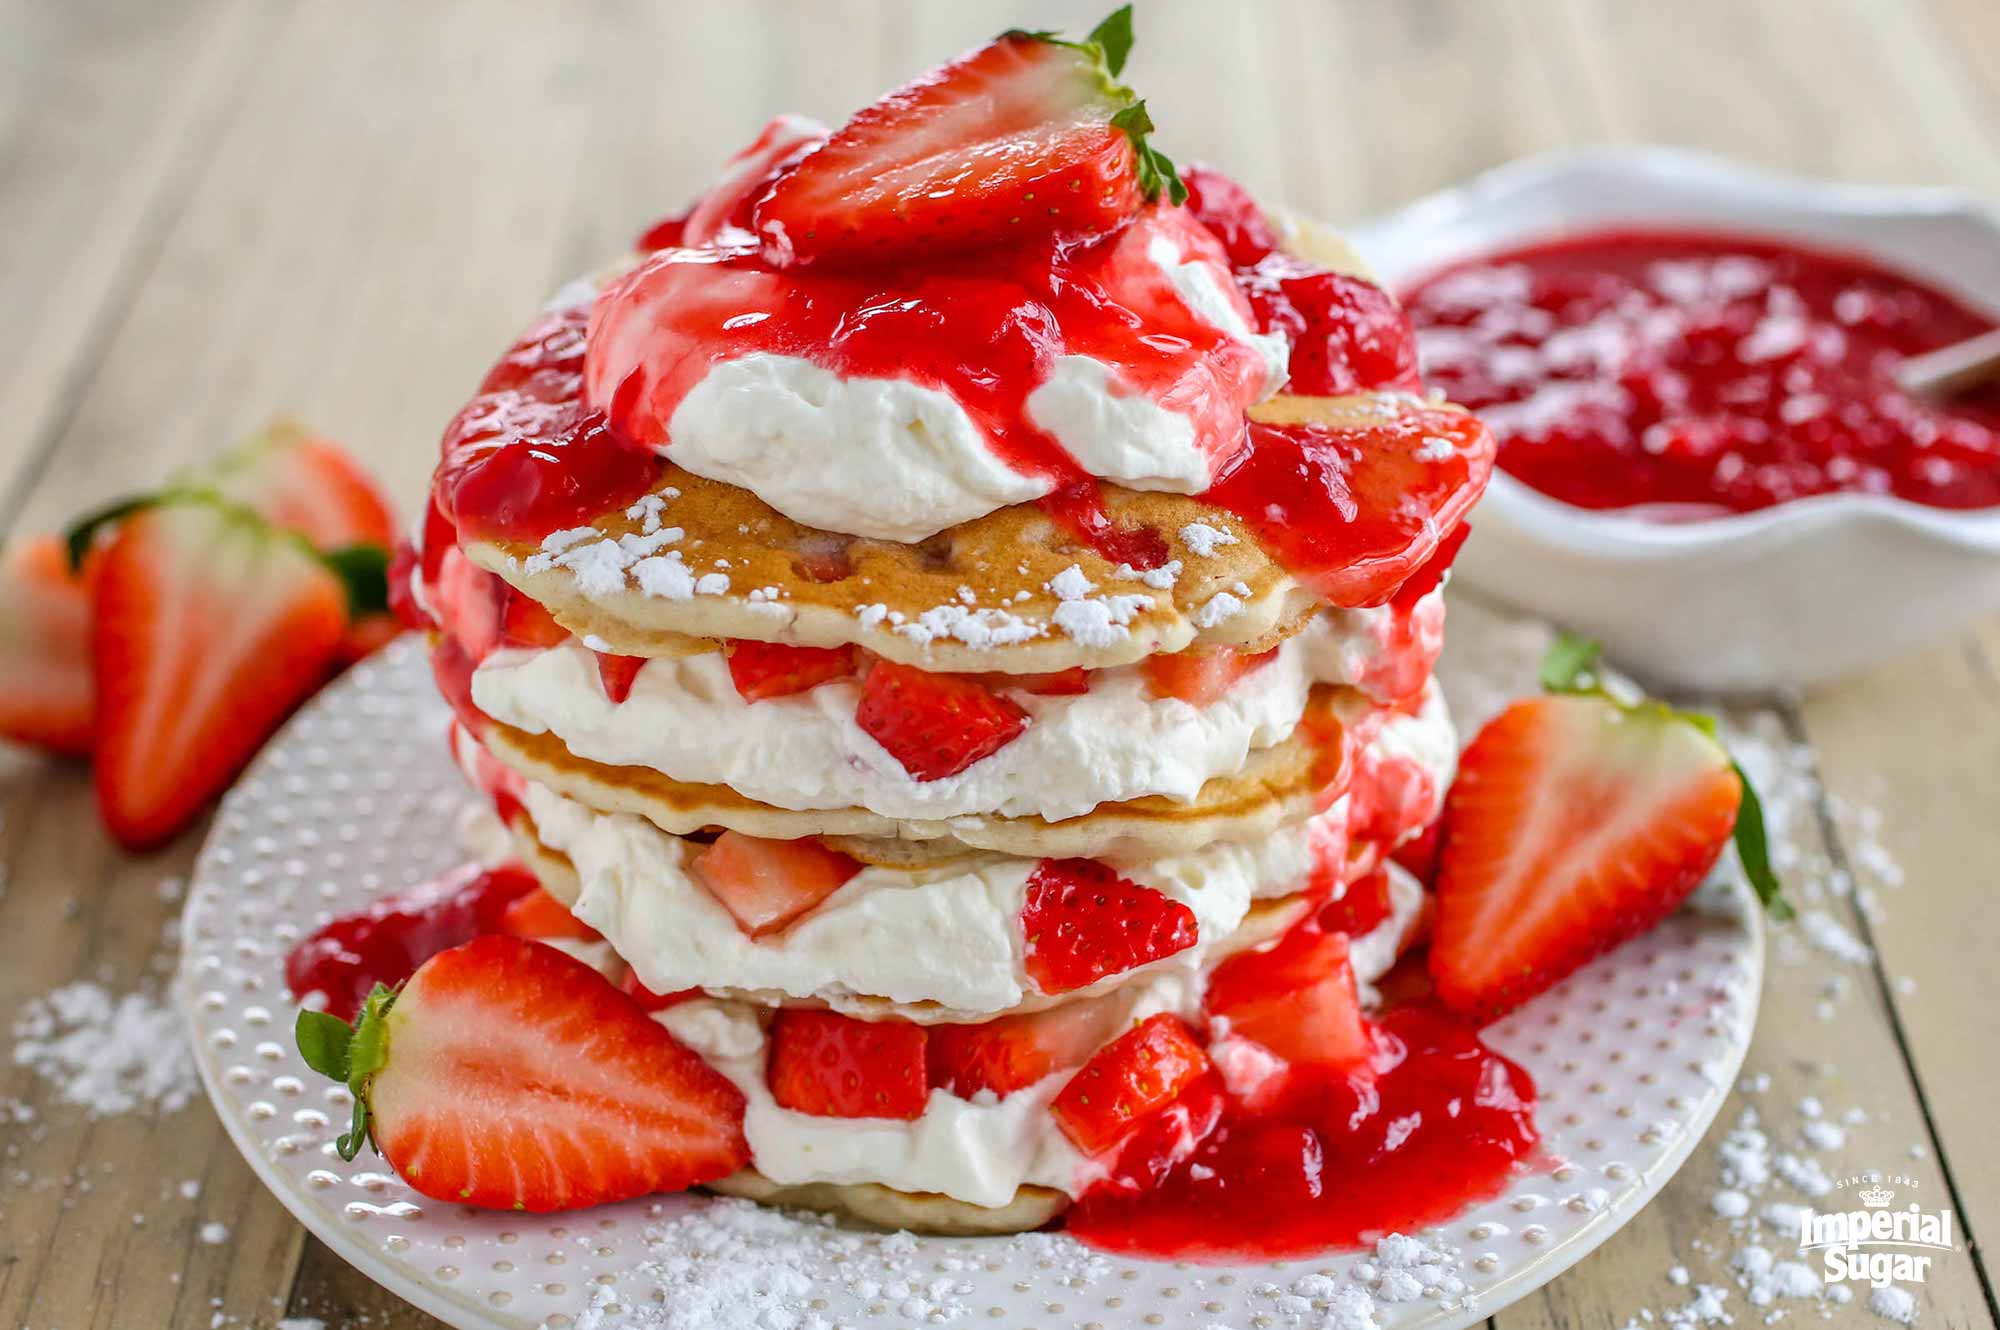 Macerated Strawberries Recipe (for Shortcake, Pancakes, Waffles)